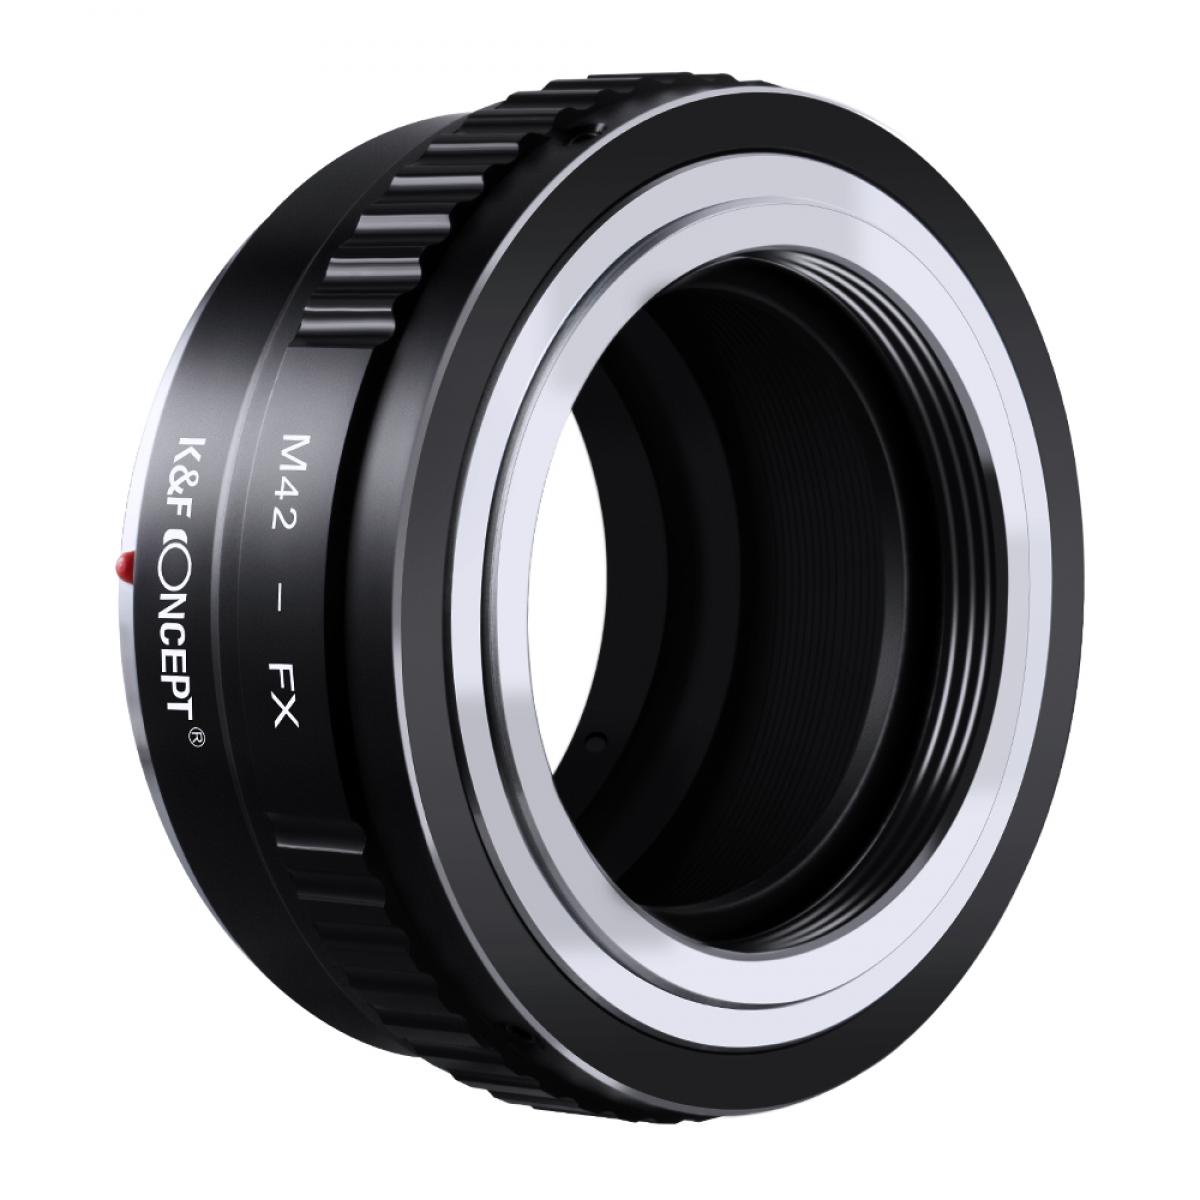 K&F Concept M42 42mm Screw to Fuji Fujifilm FX XPro1 X-Pro1 Lens Mount Adapter Ring K&F Concept Lens Adapter KF06.058